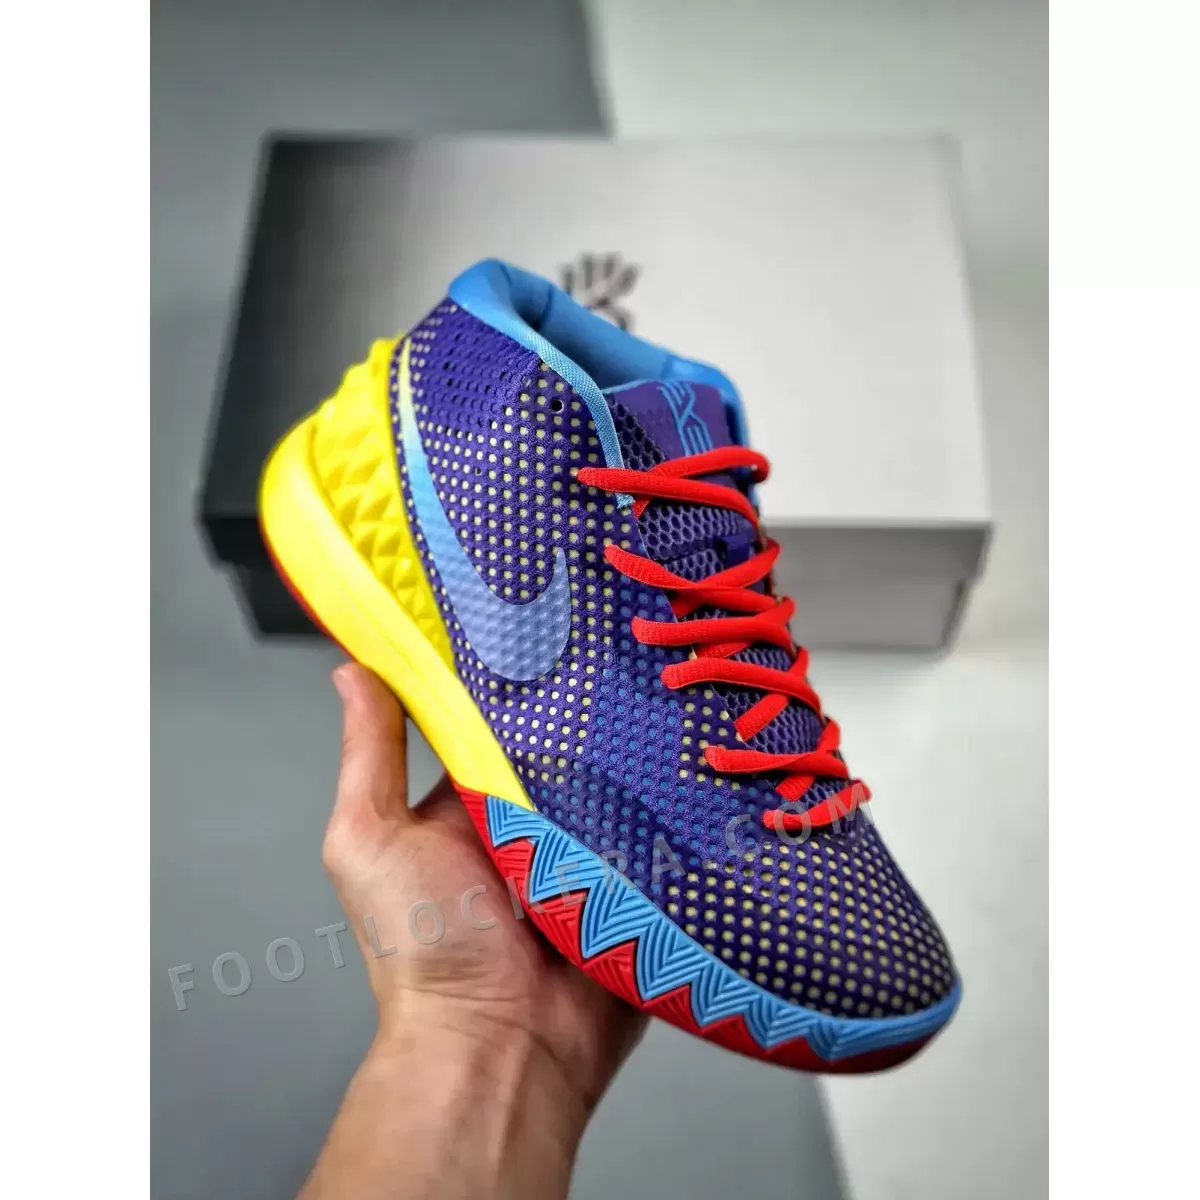 Nike Kyrie 1 "Saturdays" Lemon Frost/Multi-Color 717219-700